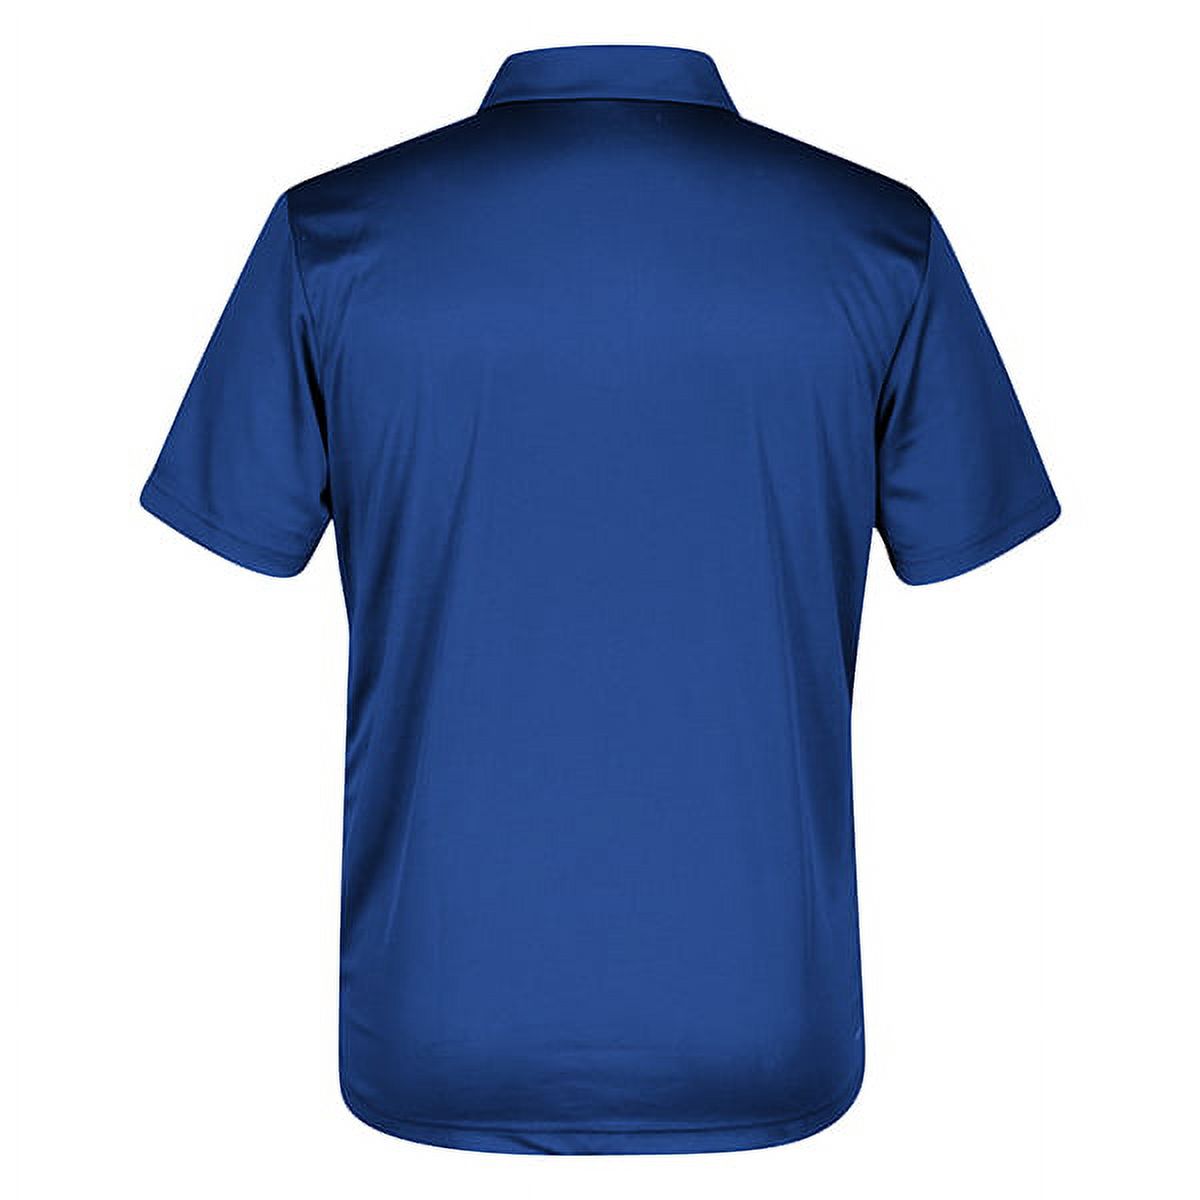 Adidas Men's Grind Climalite Performance Polo Shirt Golf Golfing (Royal, S) - image 2 of 2